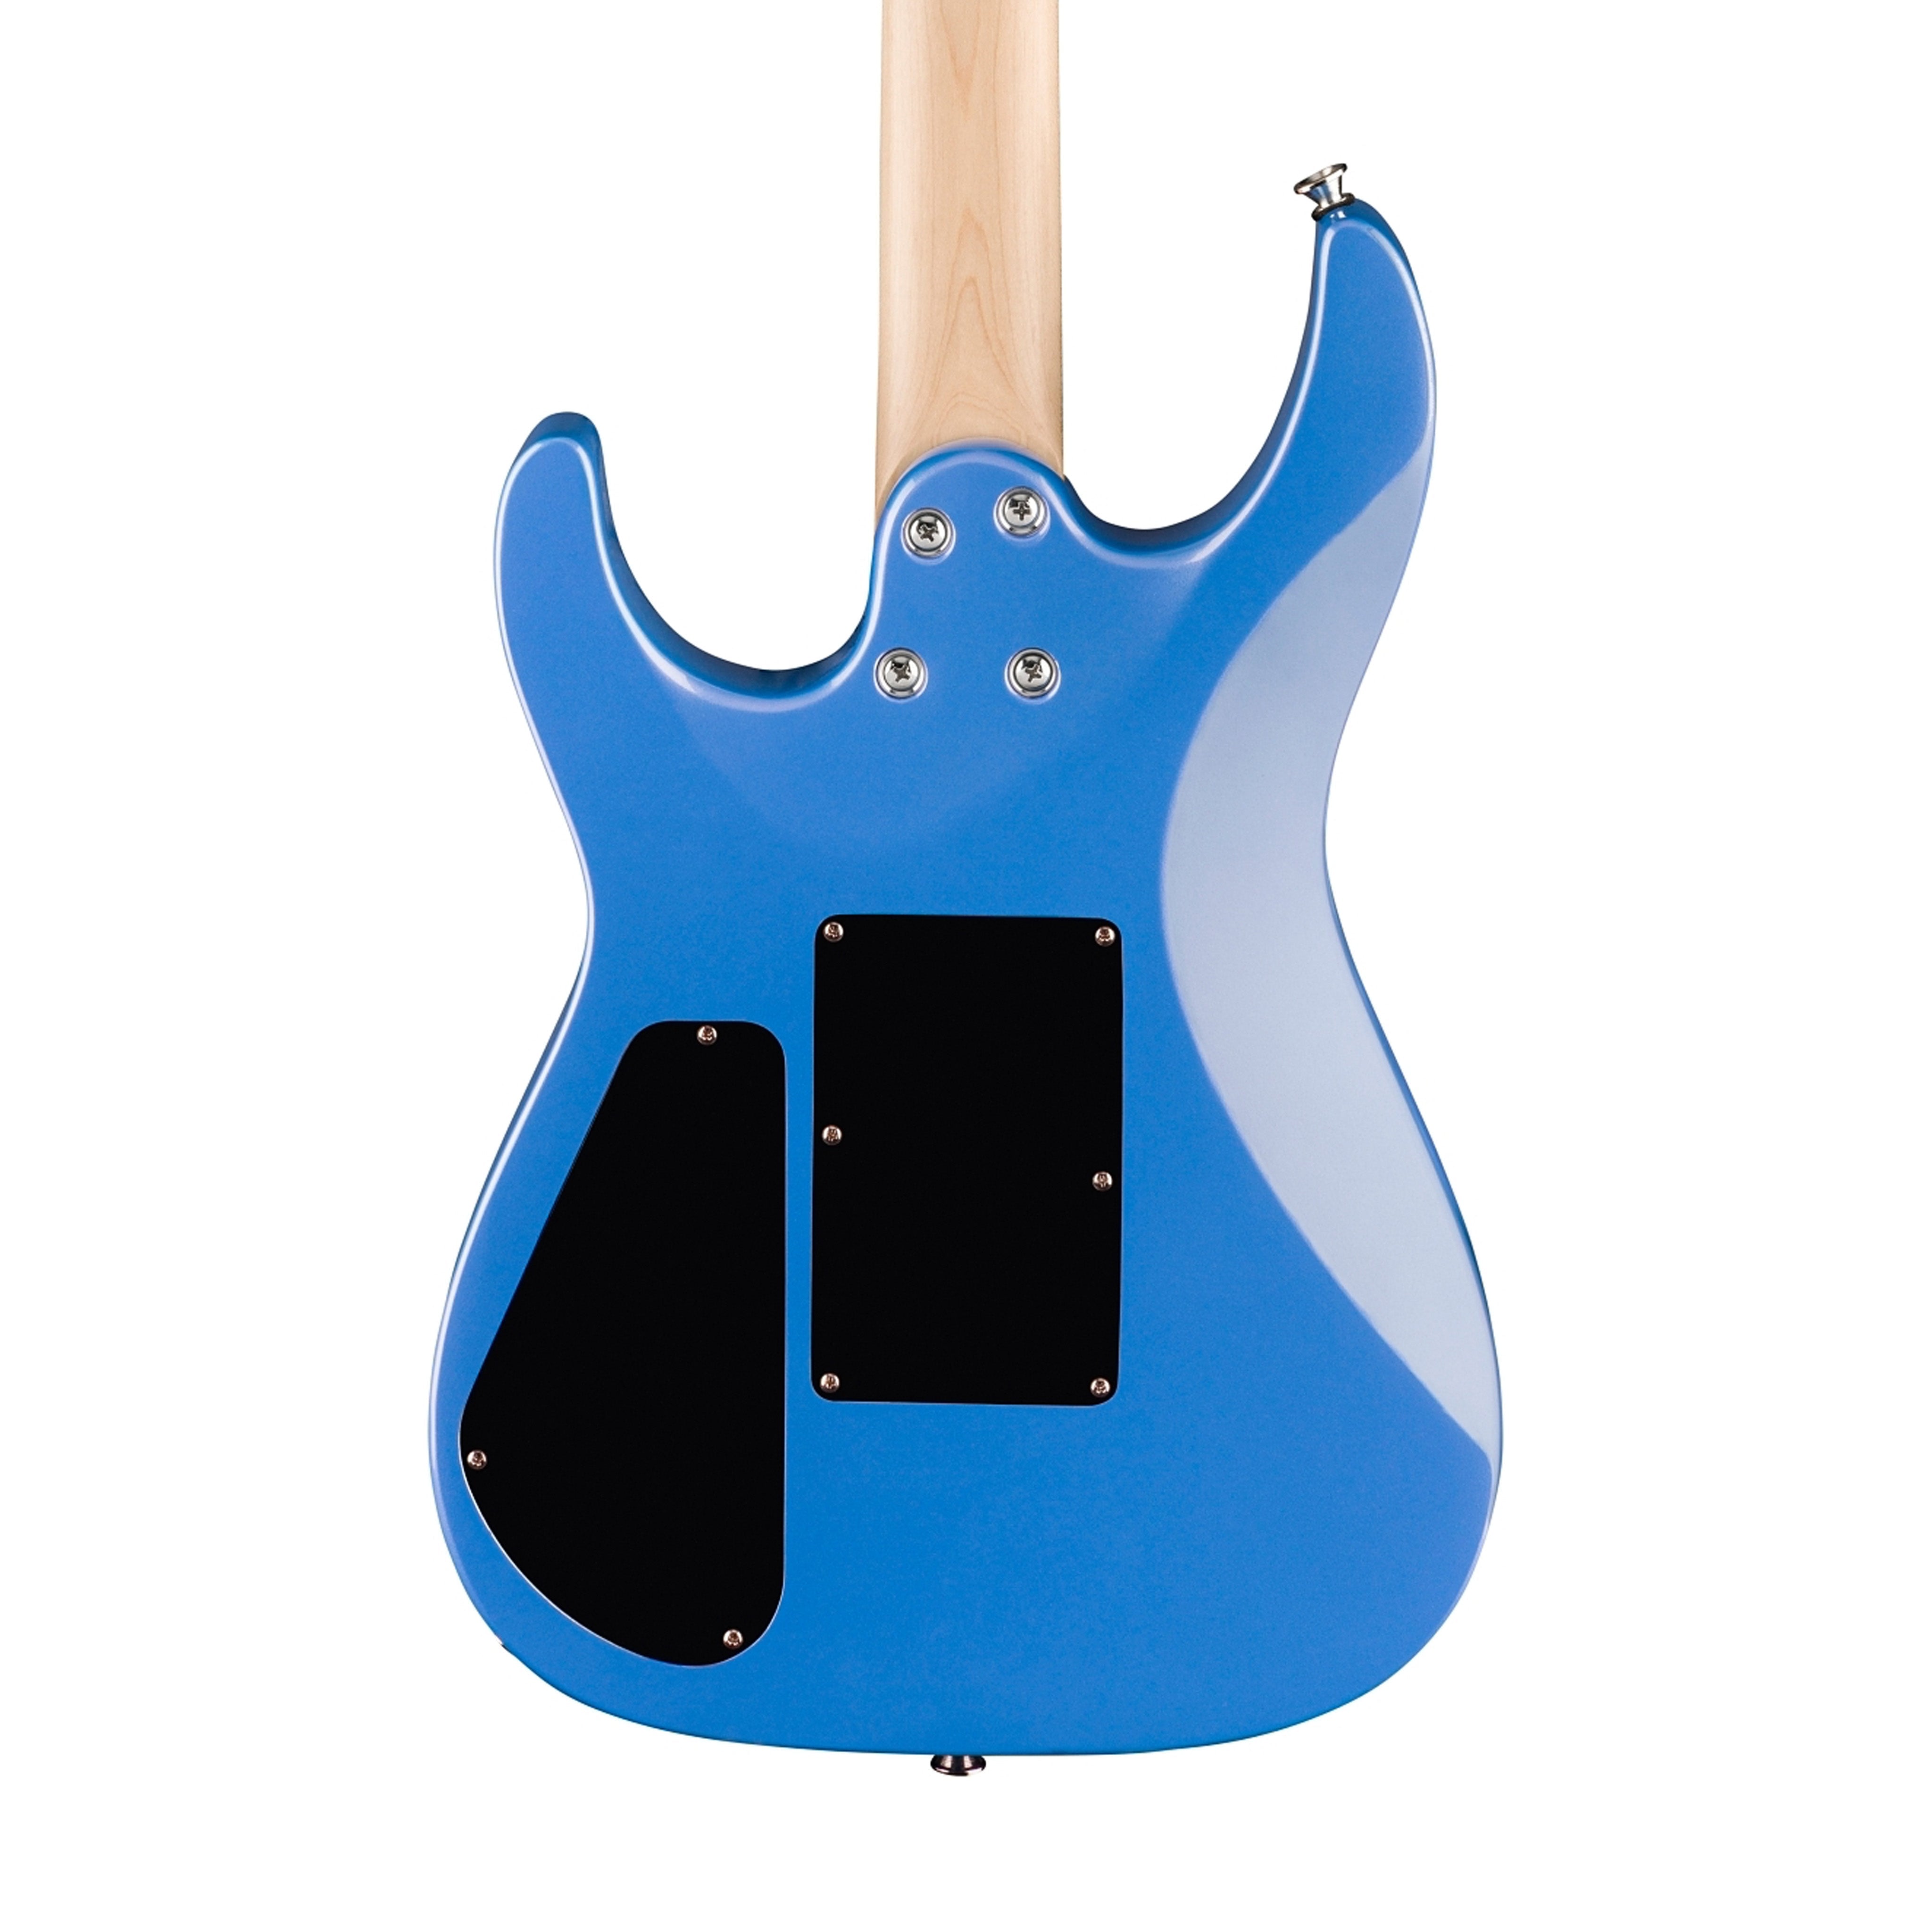 Jackson X Series DK3XRM HSS Electric Guitar, Maple FB, Frostbyte Blue